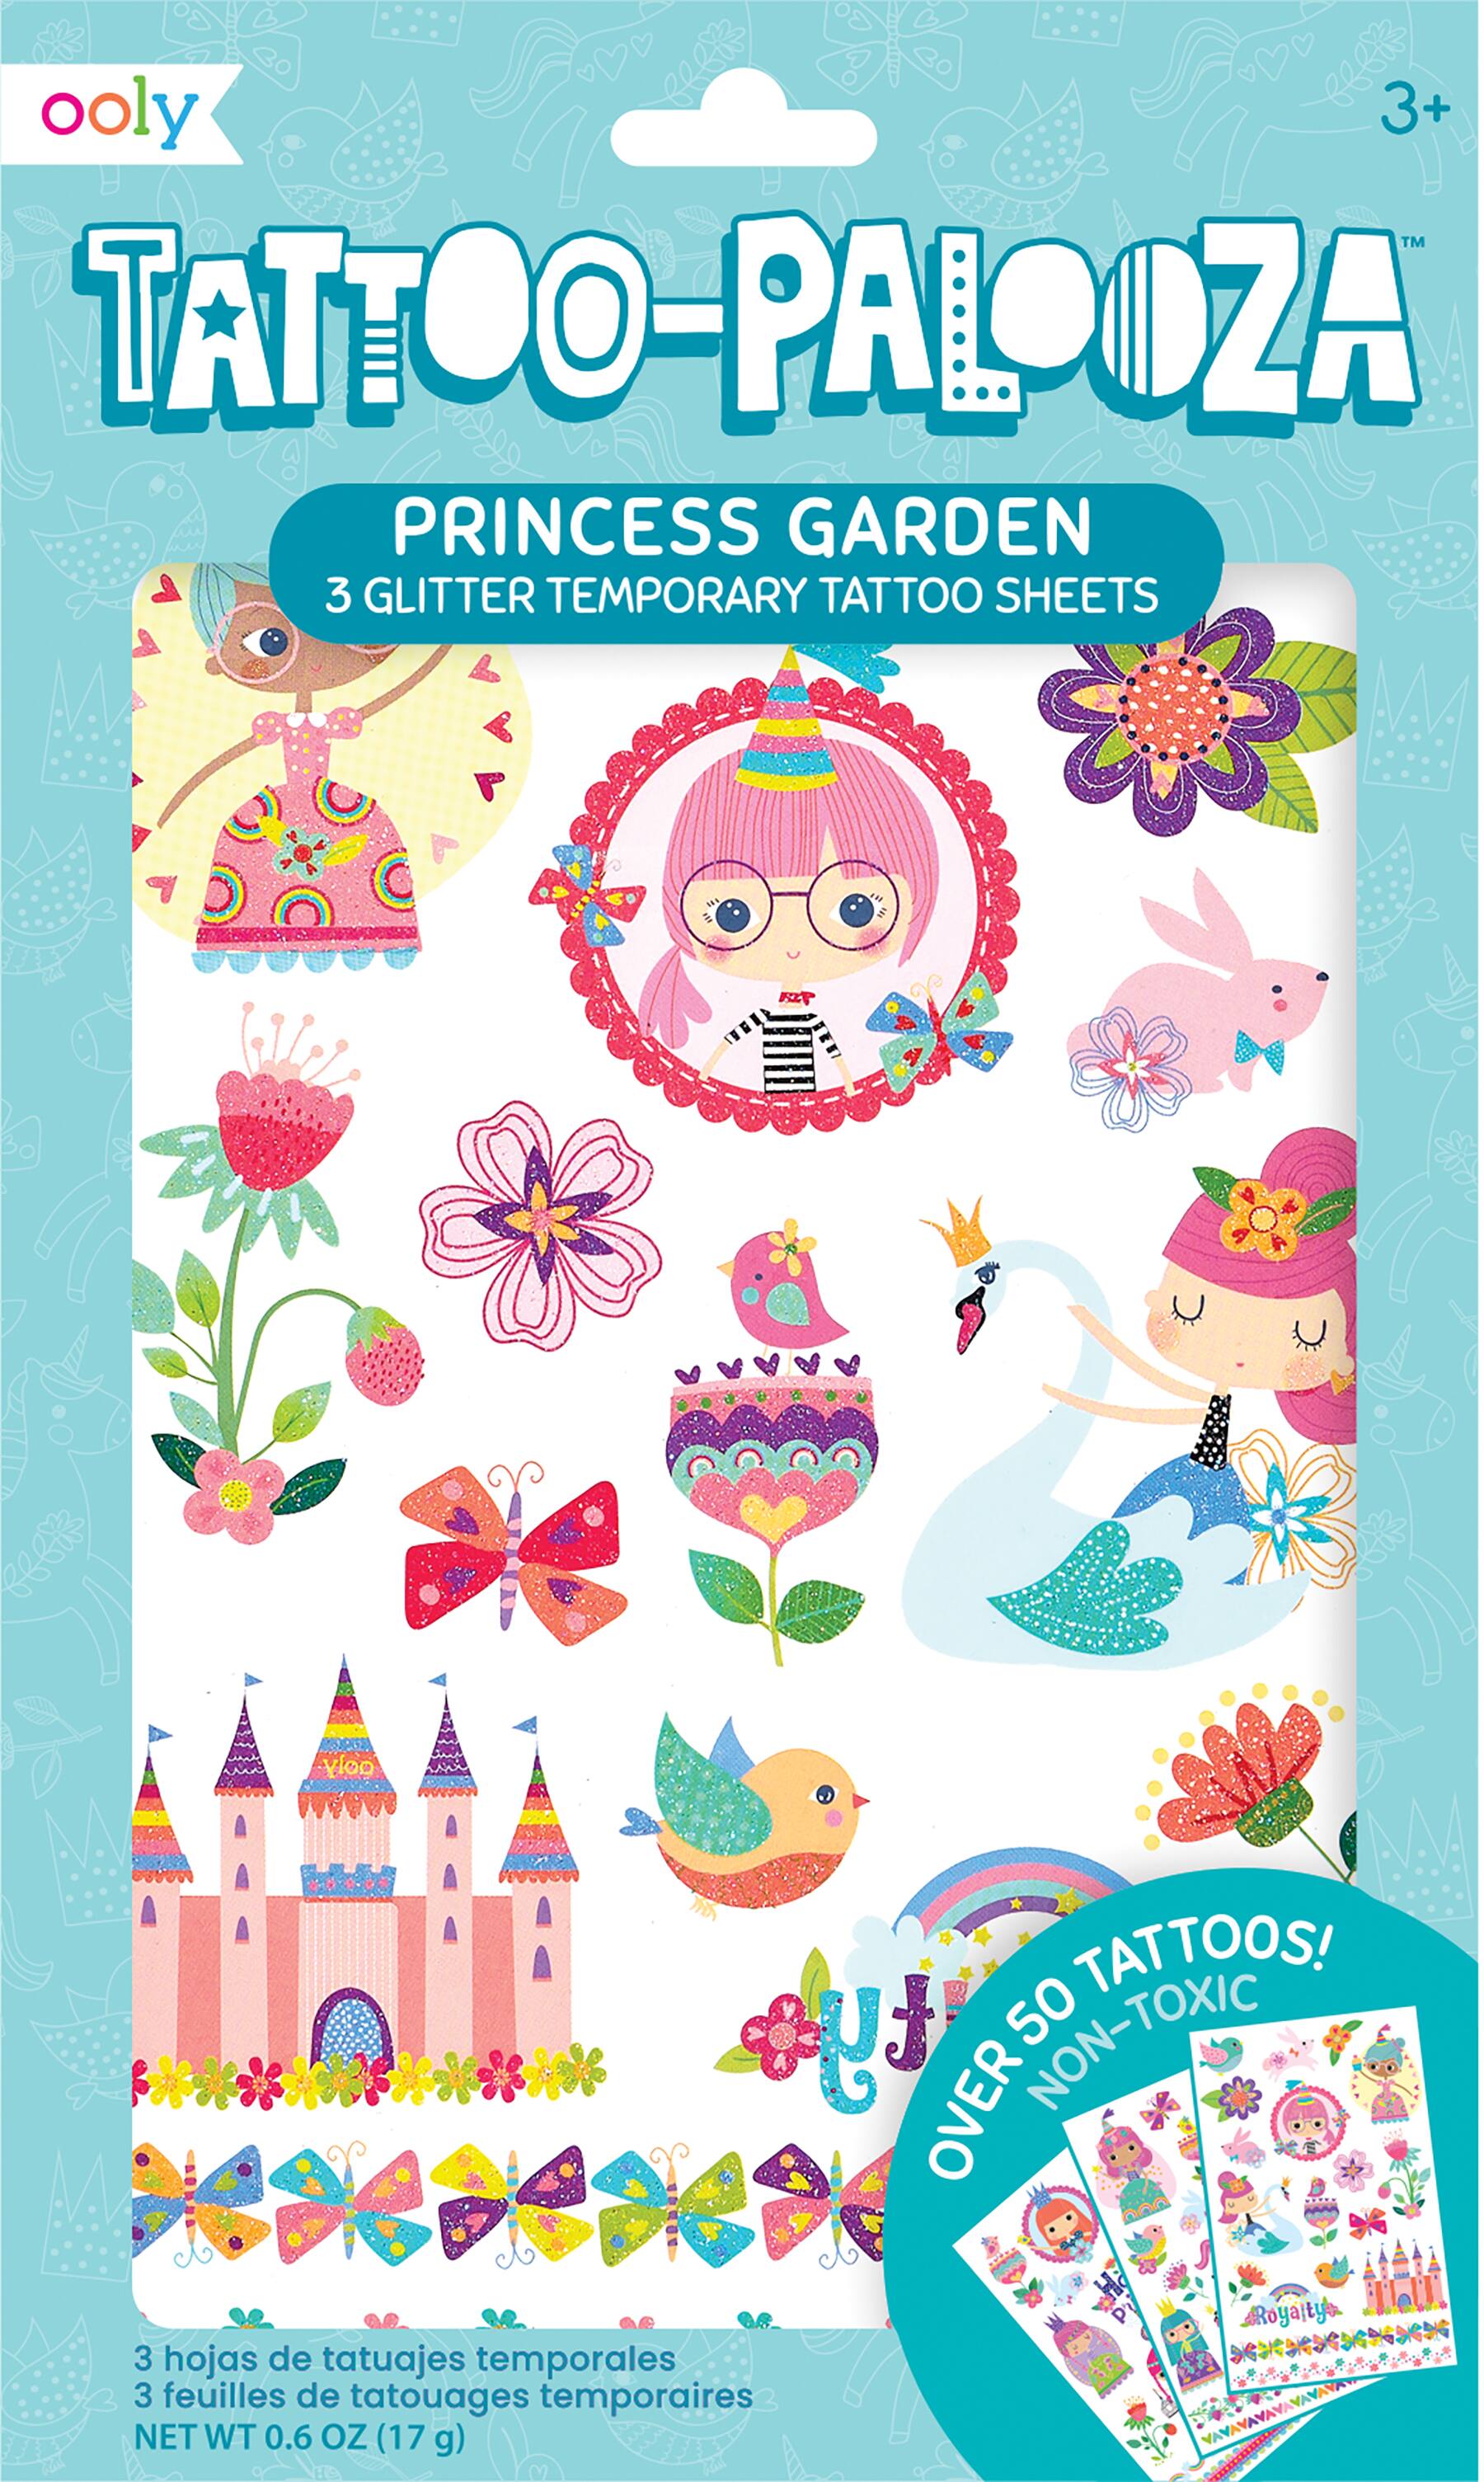 Glitter　Temporary　Michaels　Princess　OOLY　Tattoo-Palooza　Set　Garden　Tattoo